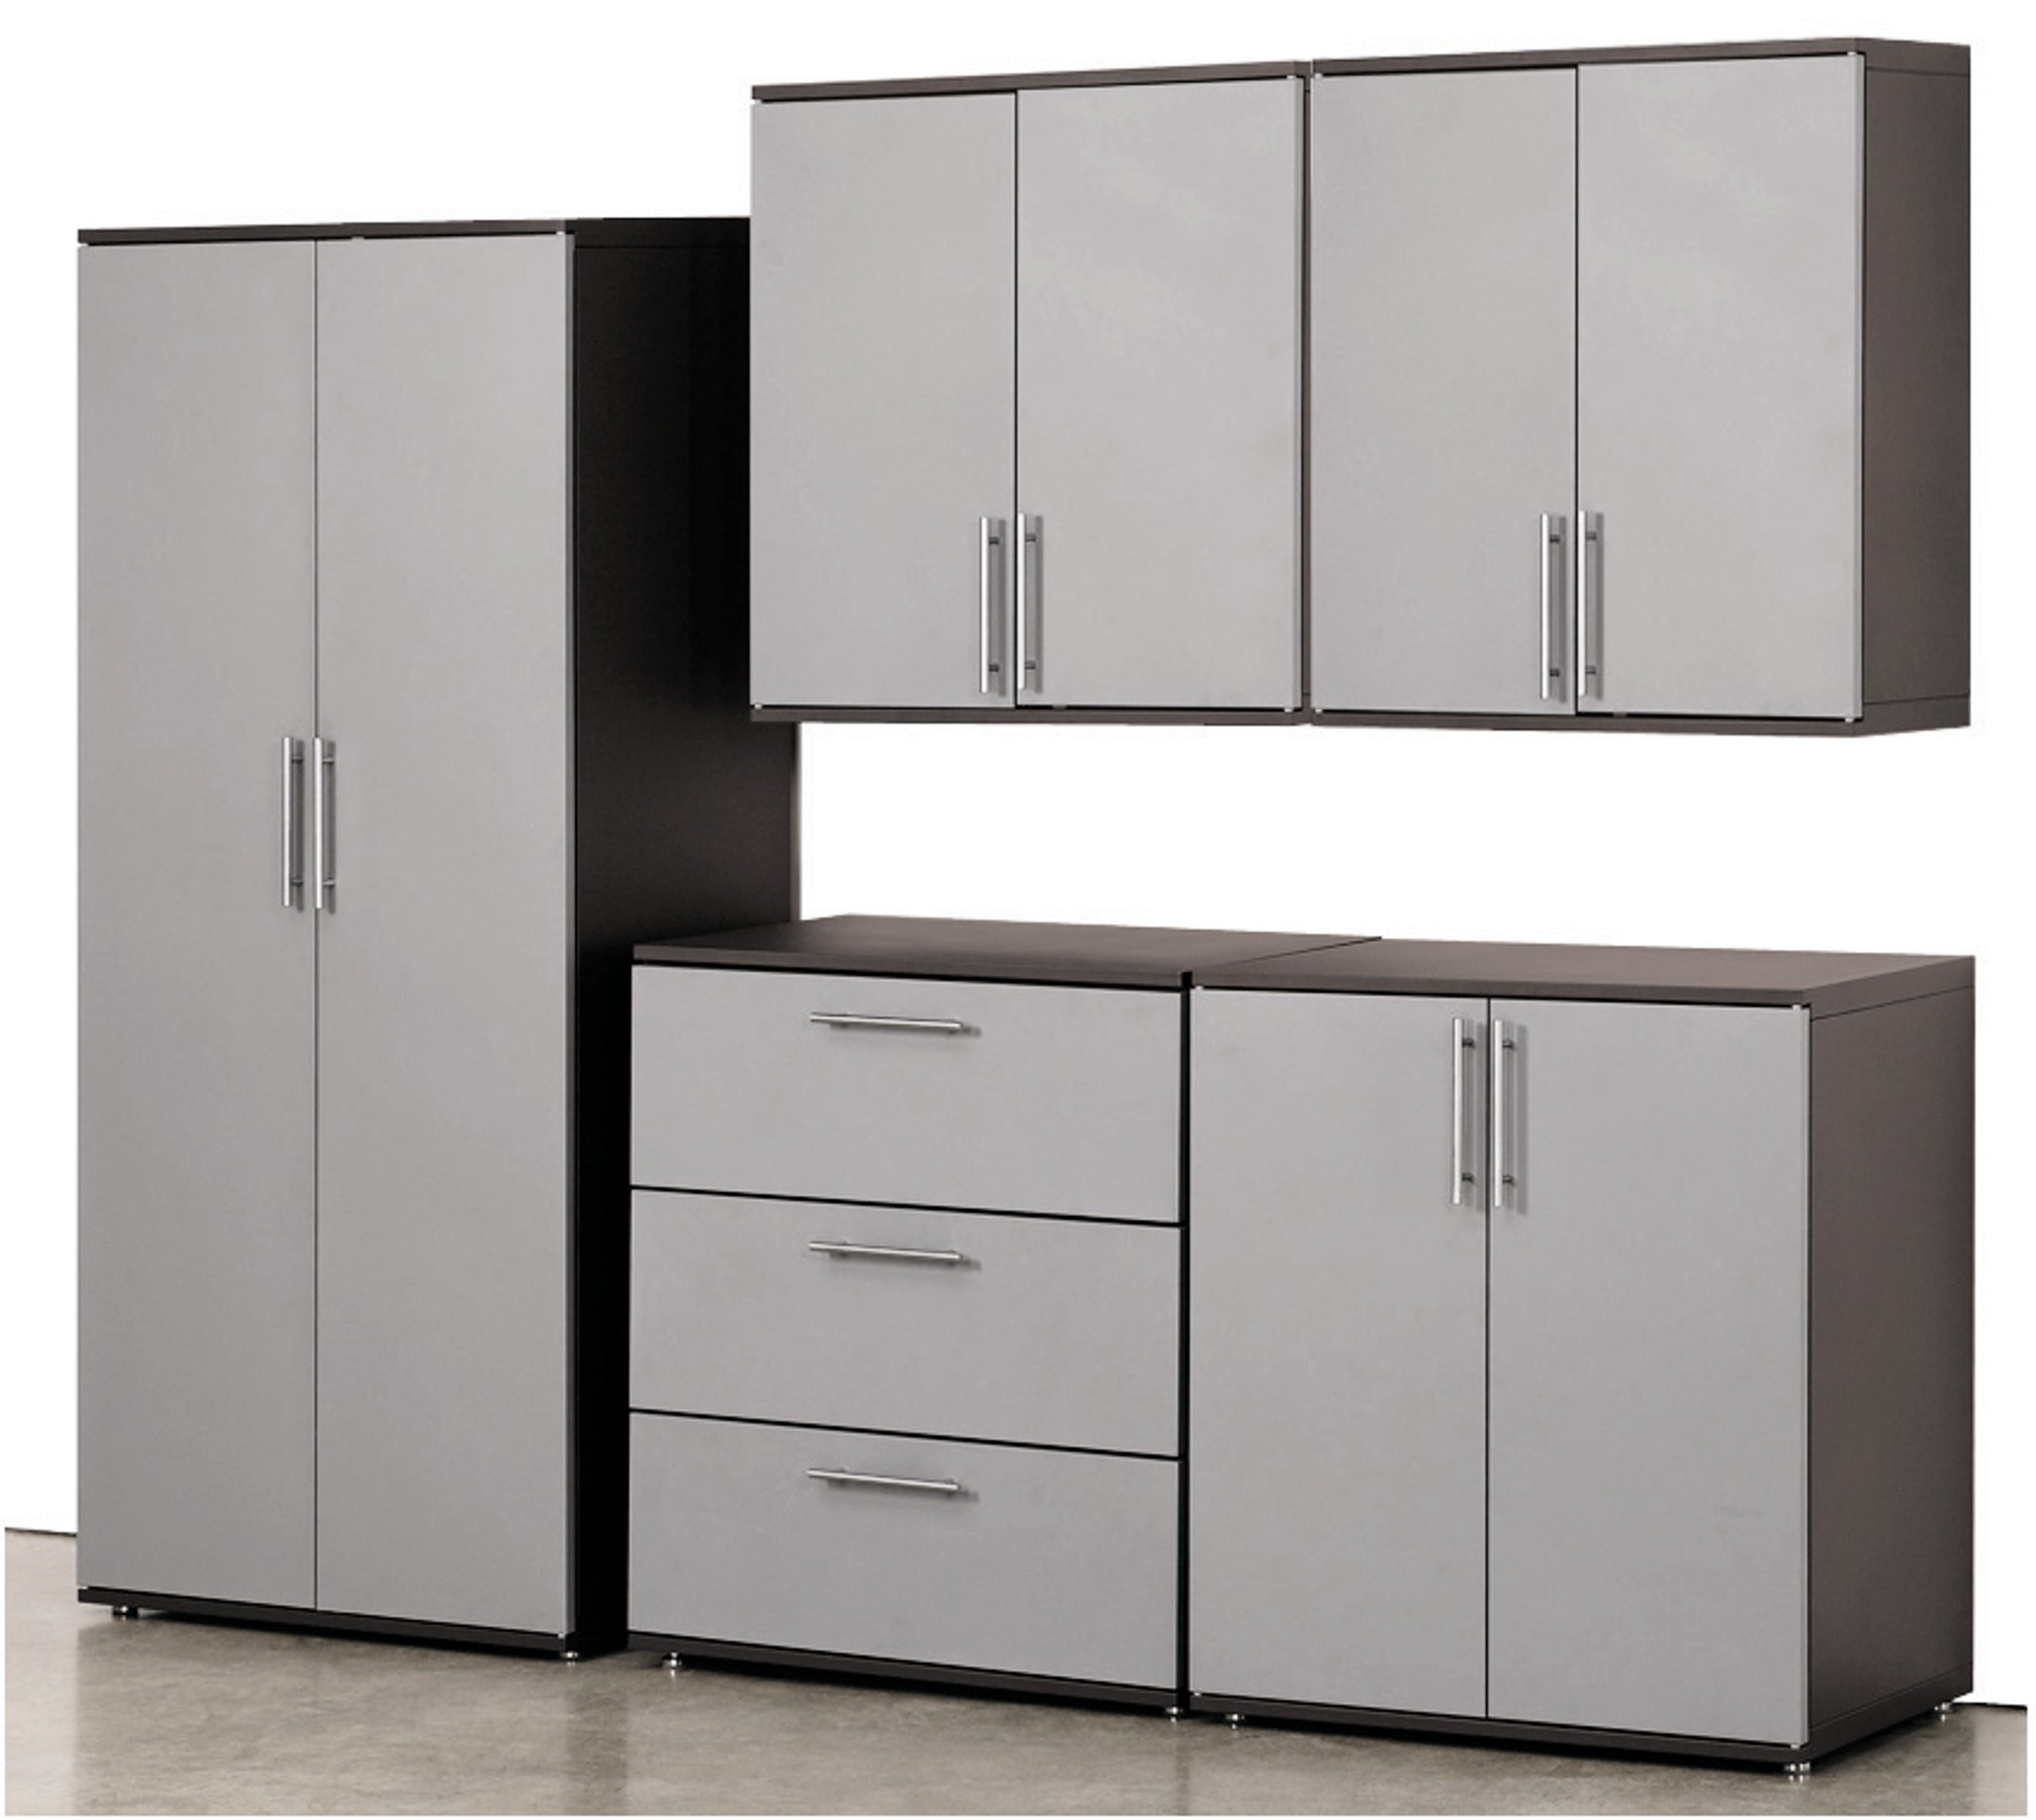 Garage Organization Cabinets
 Garage Cabinet Systems Amazon